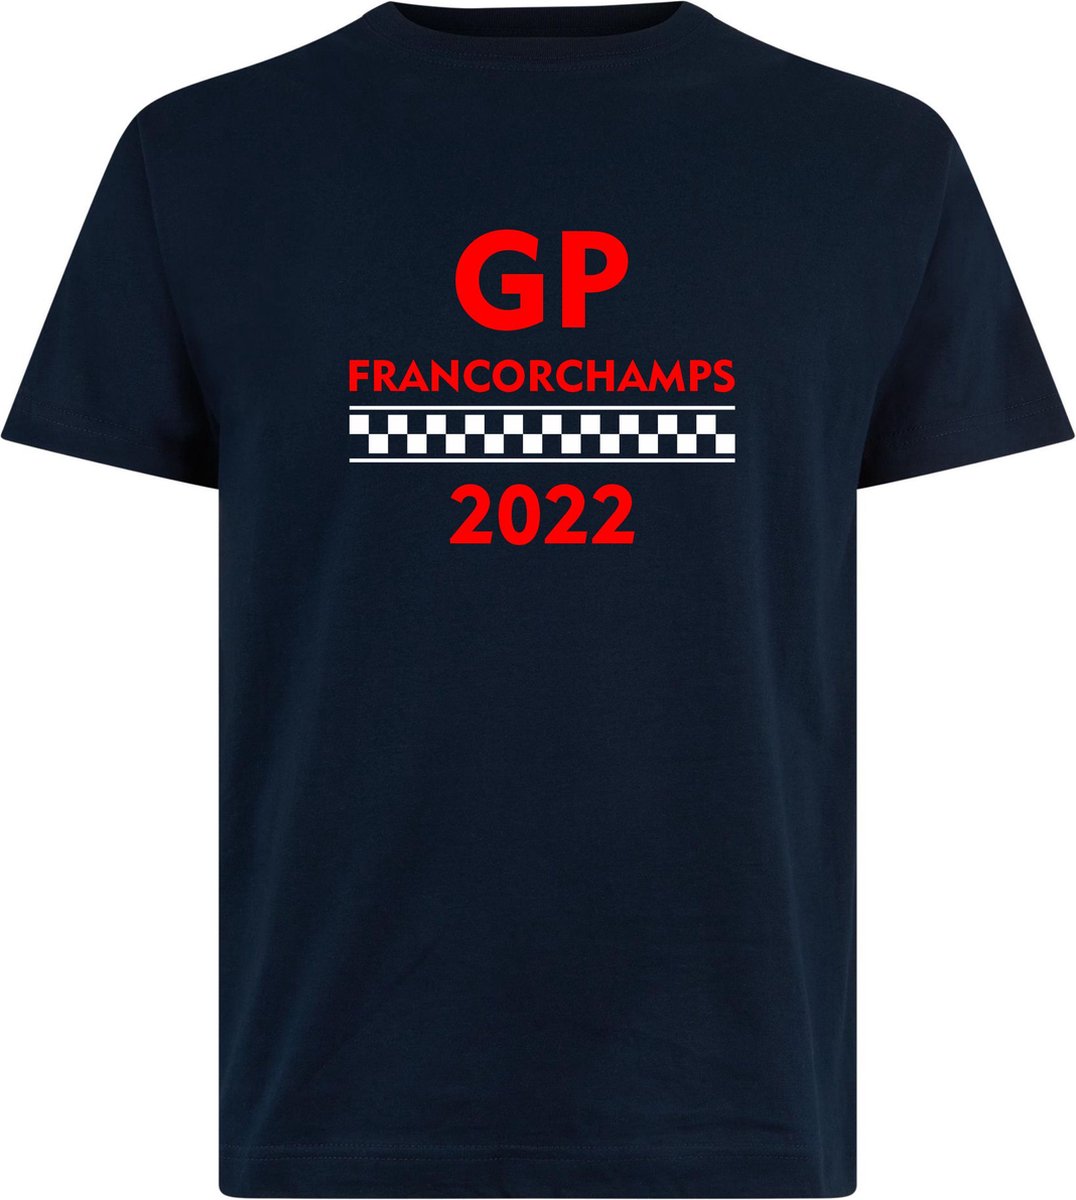 T-shirt kinderen GP Francorchamps 2022 | Max Verstappen / Red Bull Racing / Formule 1 fan | Grand Prix Circuit Spa-Francorchamps | kleding shirt | Navy | maat 104